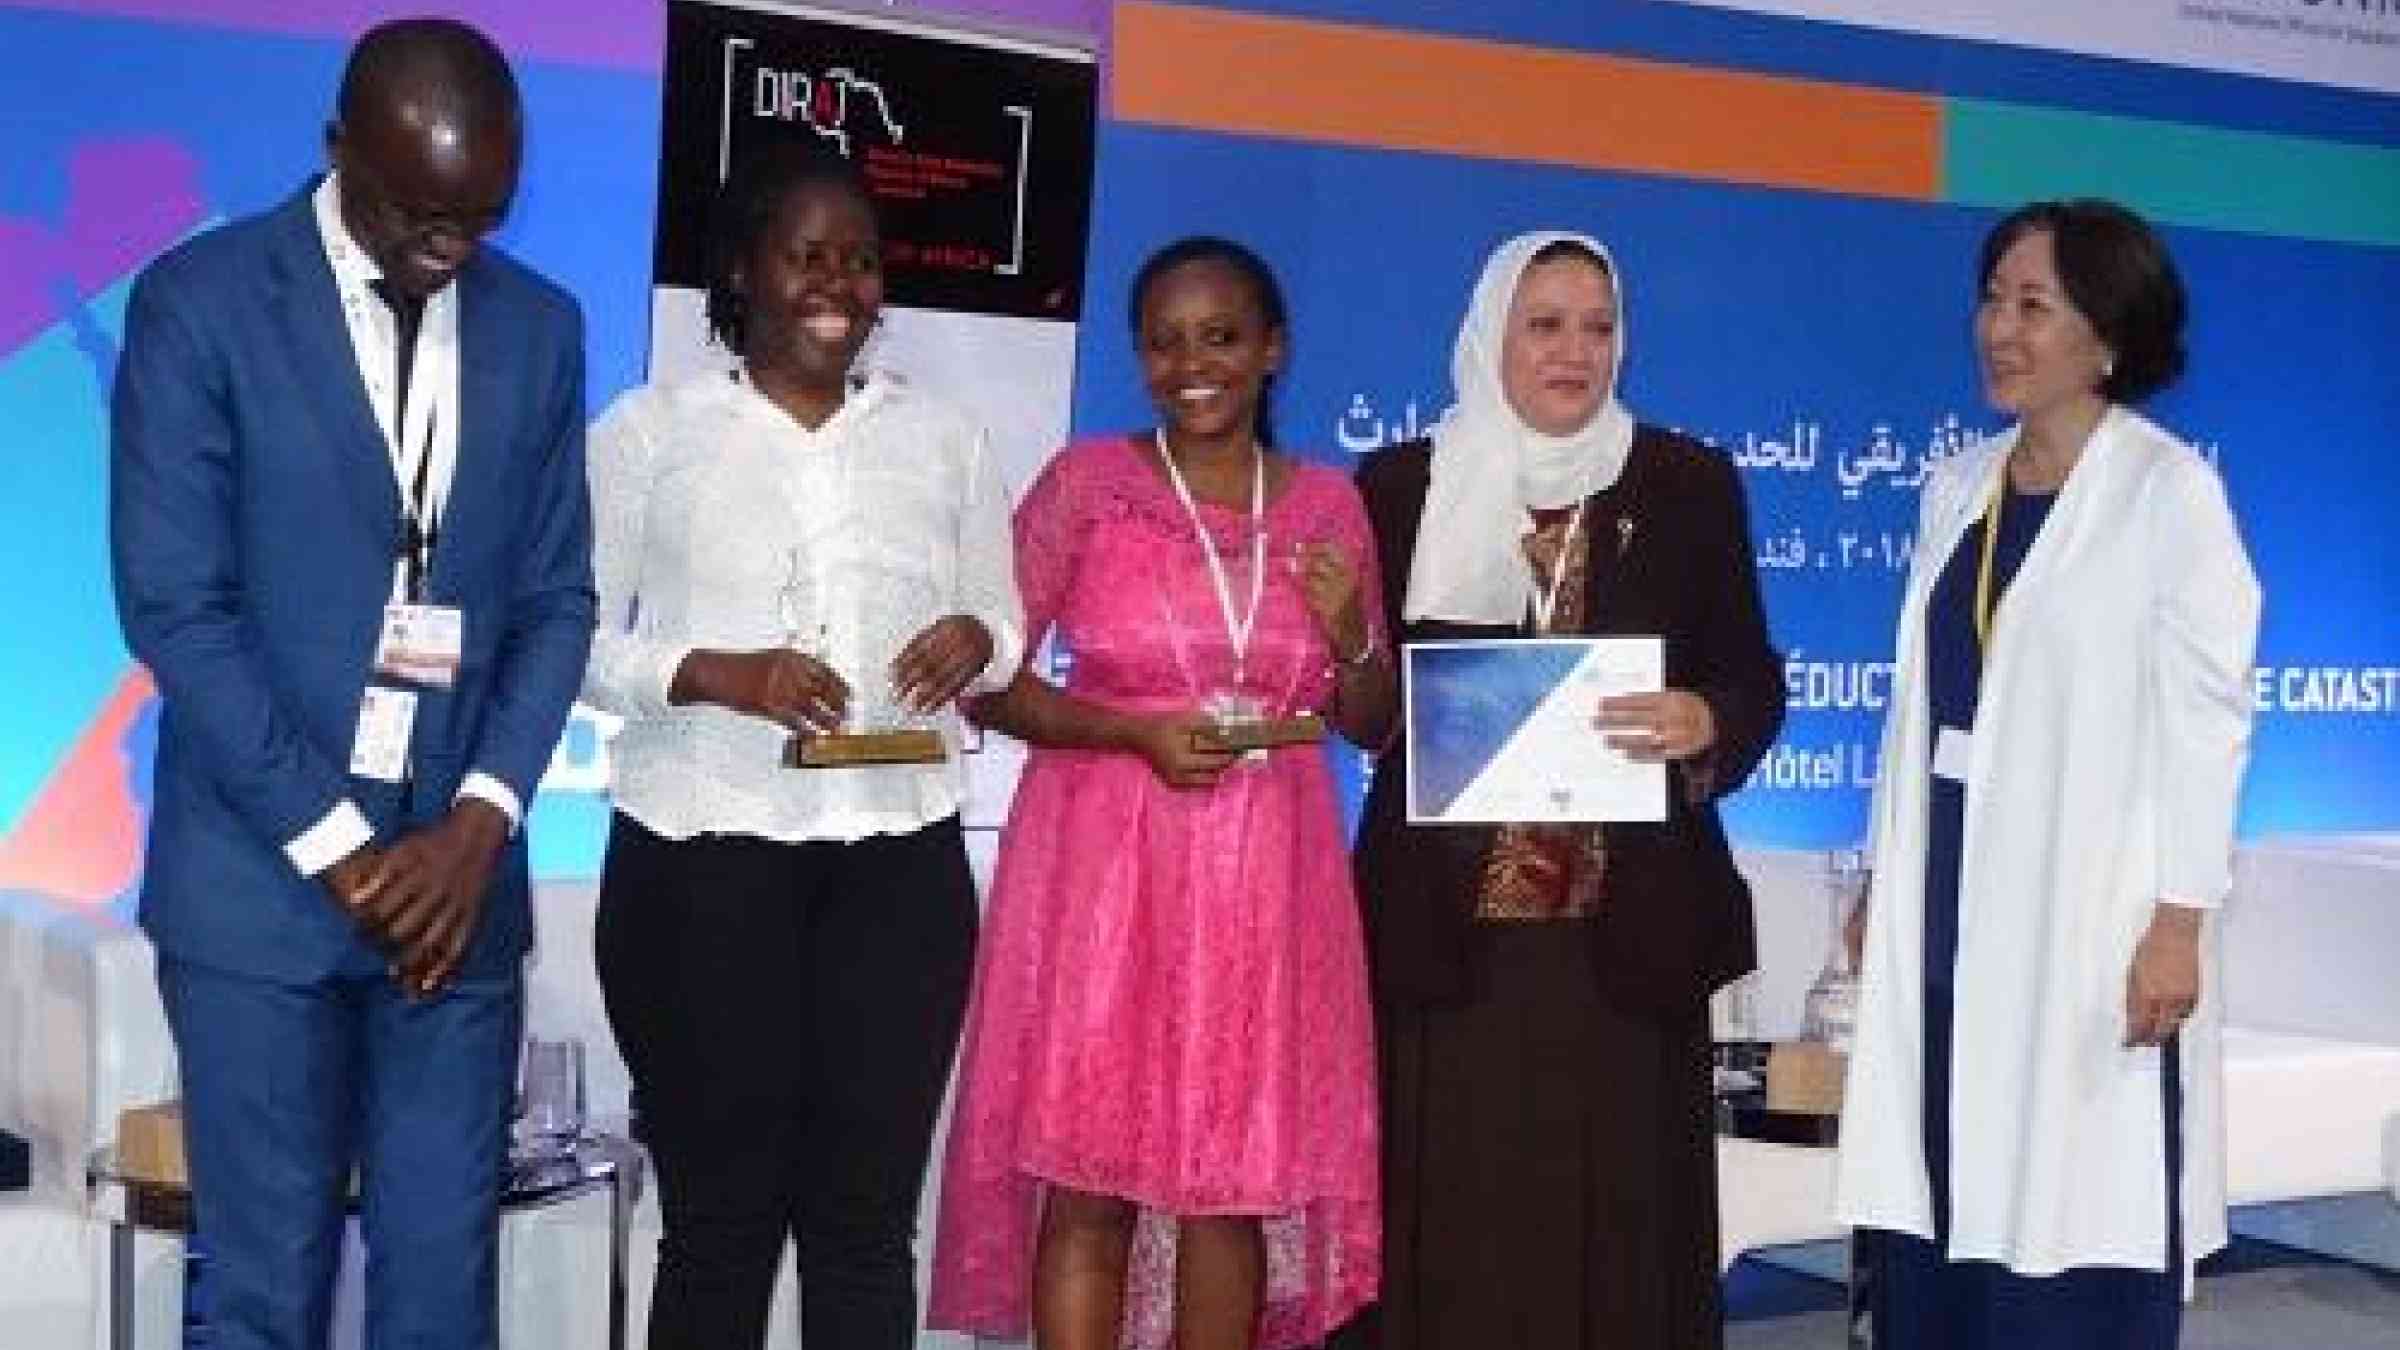 From left: Diraj founder, David Owino with media award winners, Ruth Keah Kadide, Kenya, Dicta Asiimwe, Uganda, Mai Elshafei, Egypt, and UNISDR head, Mami Mizutori